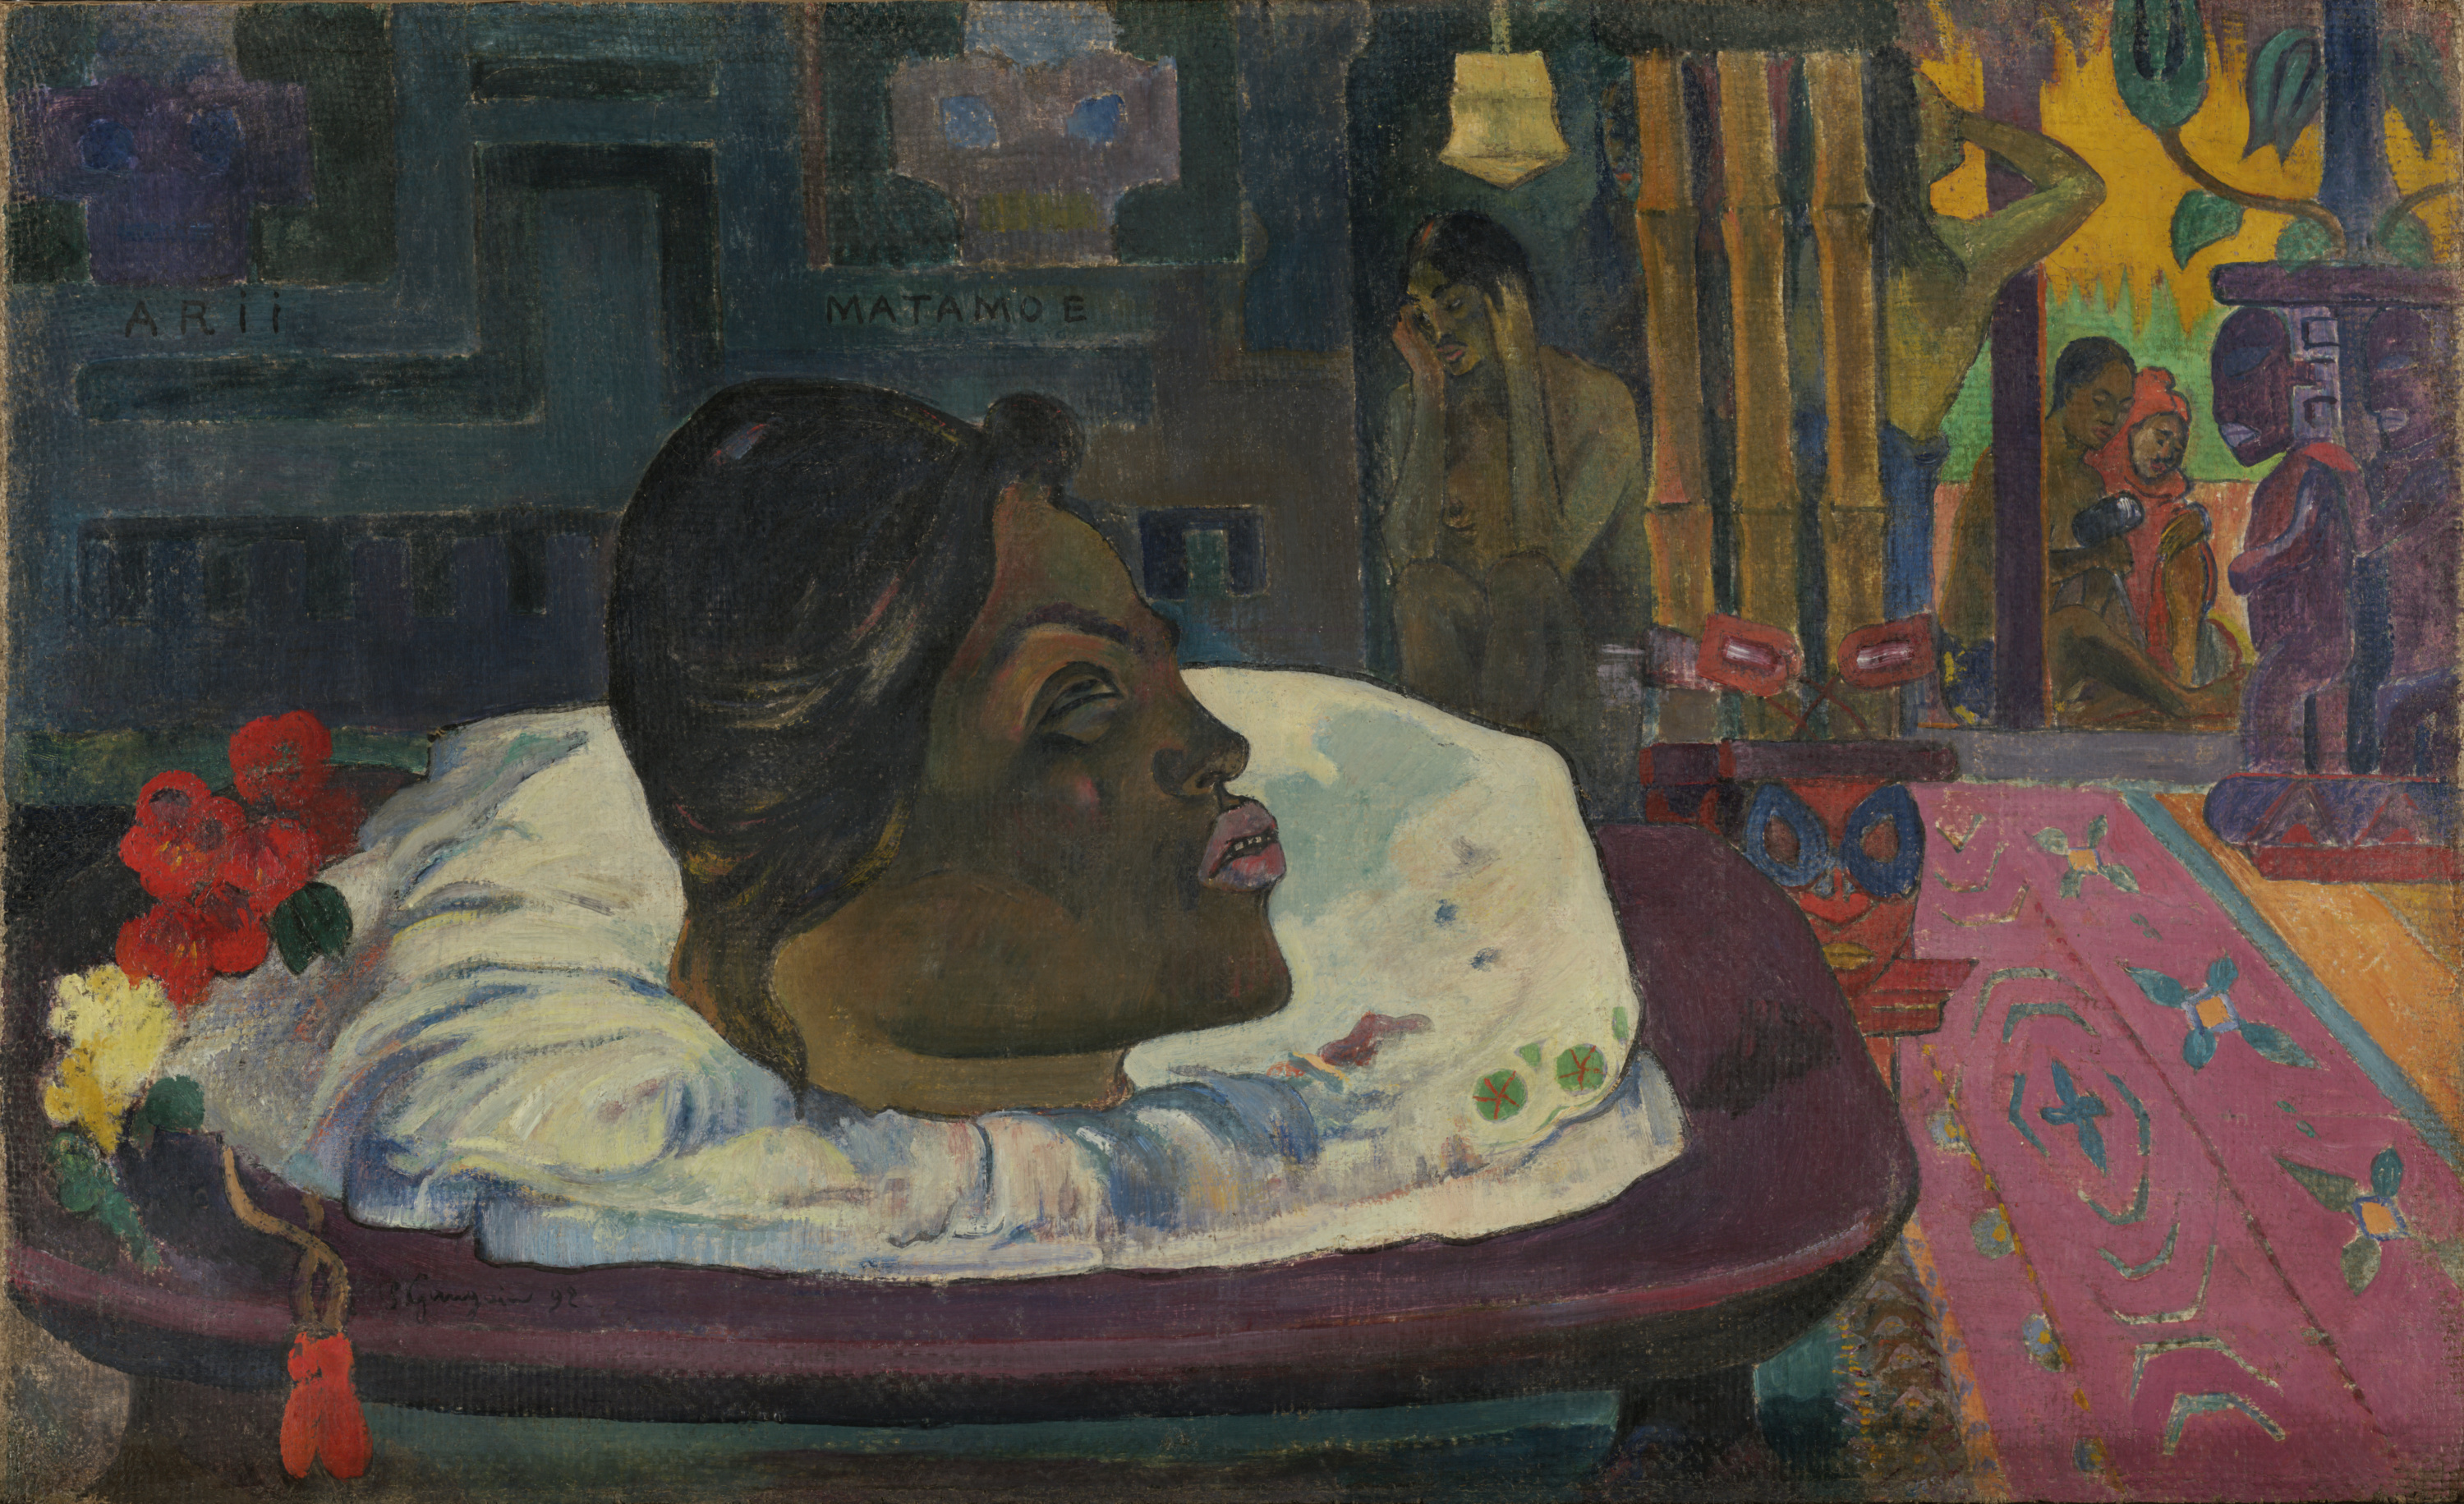 Arii Matamoe (Królewski koniec) by Paul Gauguin - 1892 - 45,1 × 74,3 cm 